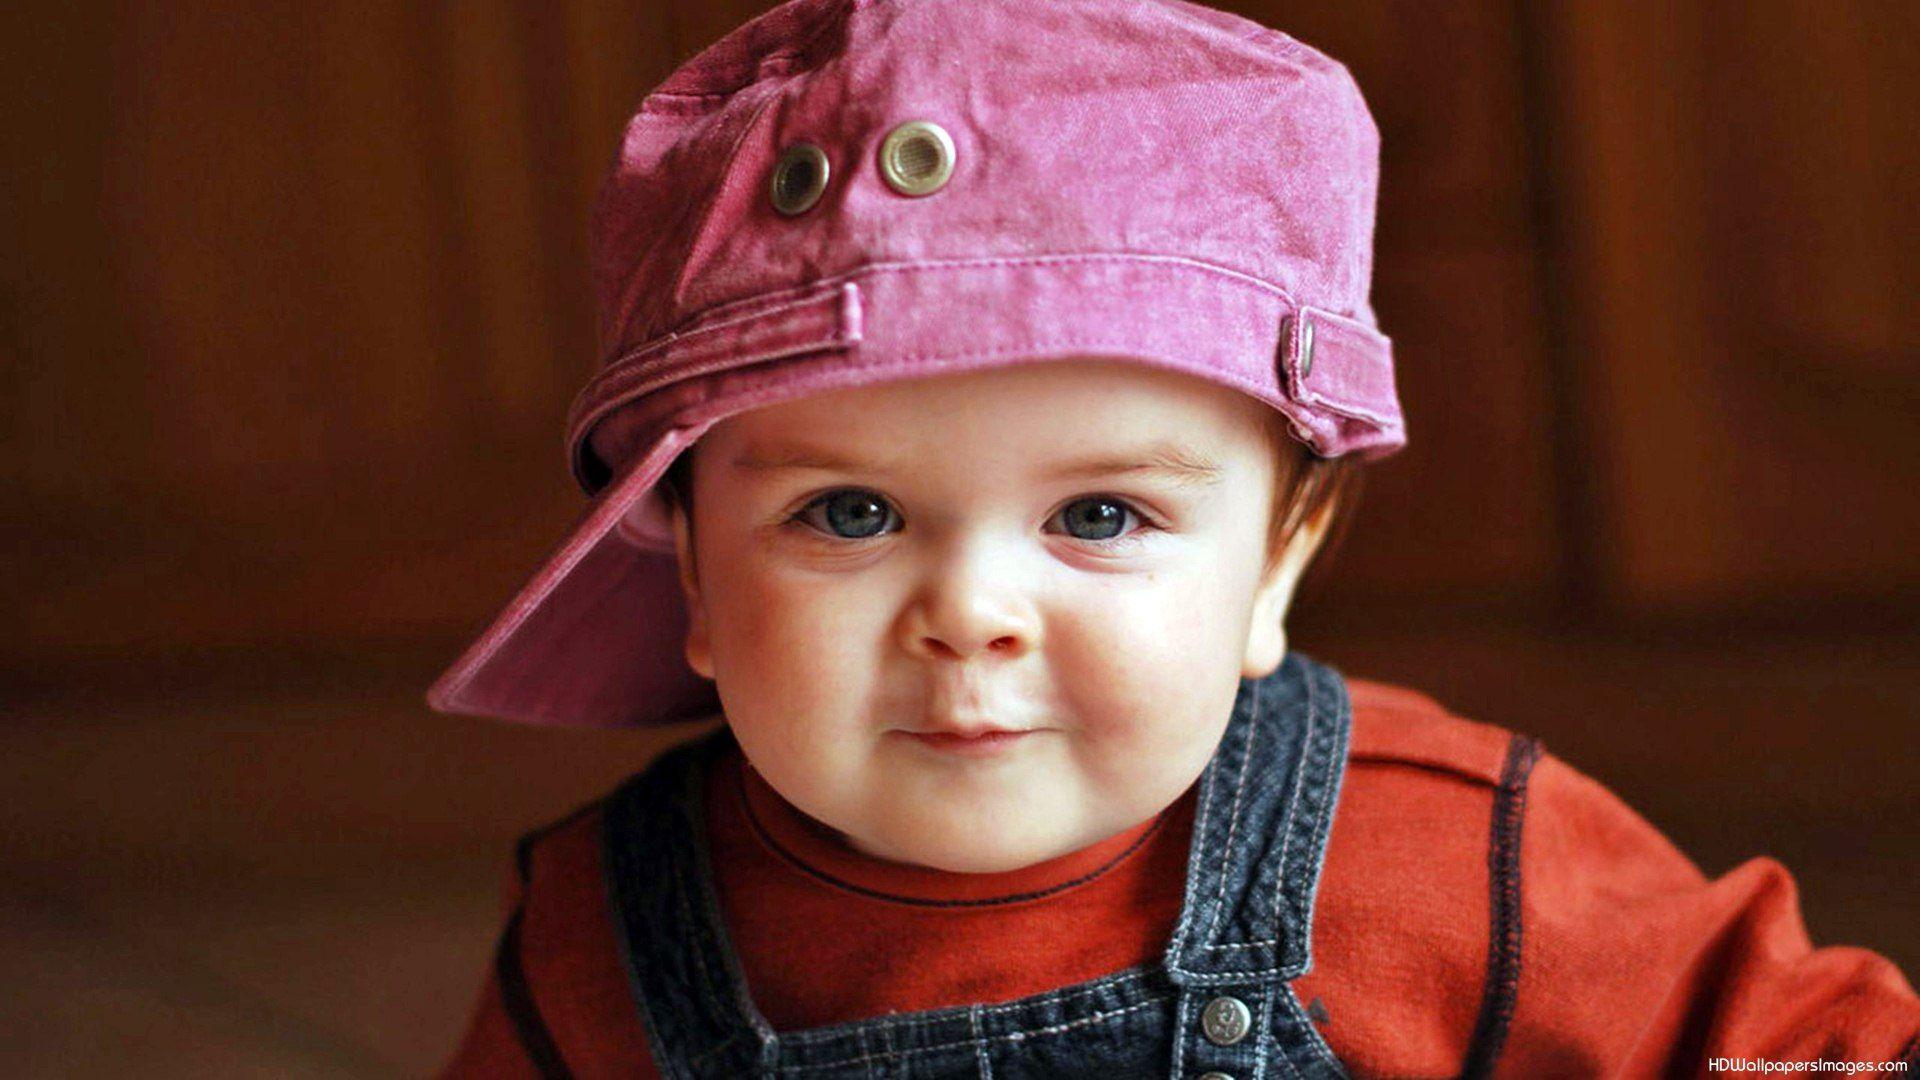 Cute Child Boy Wallpaper. Cute Baby Wallpaper